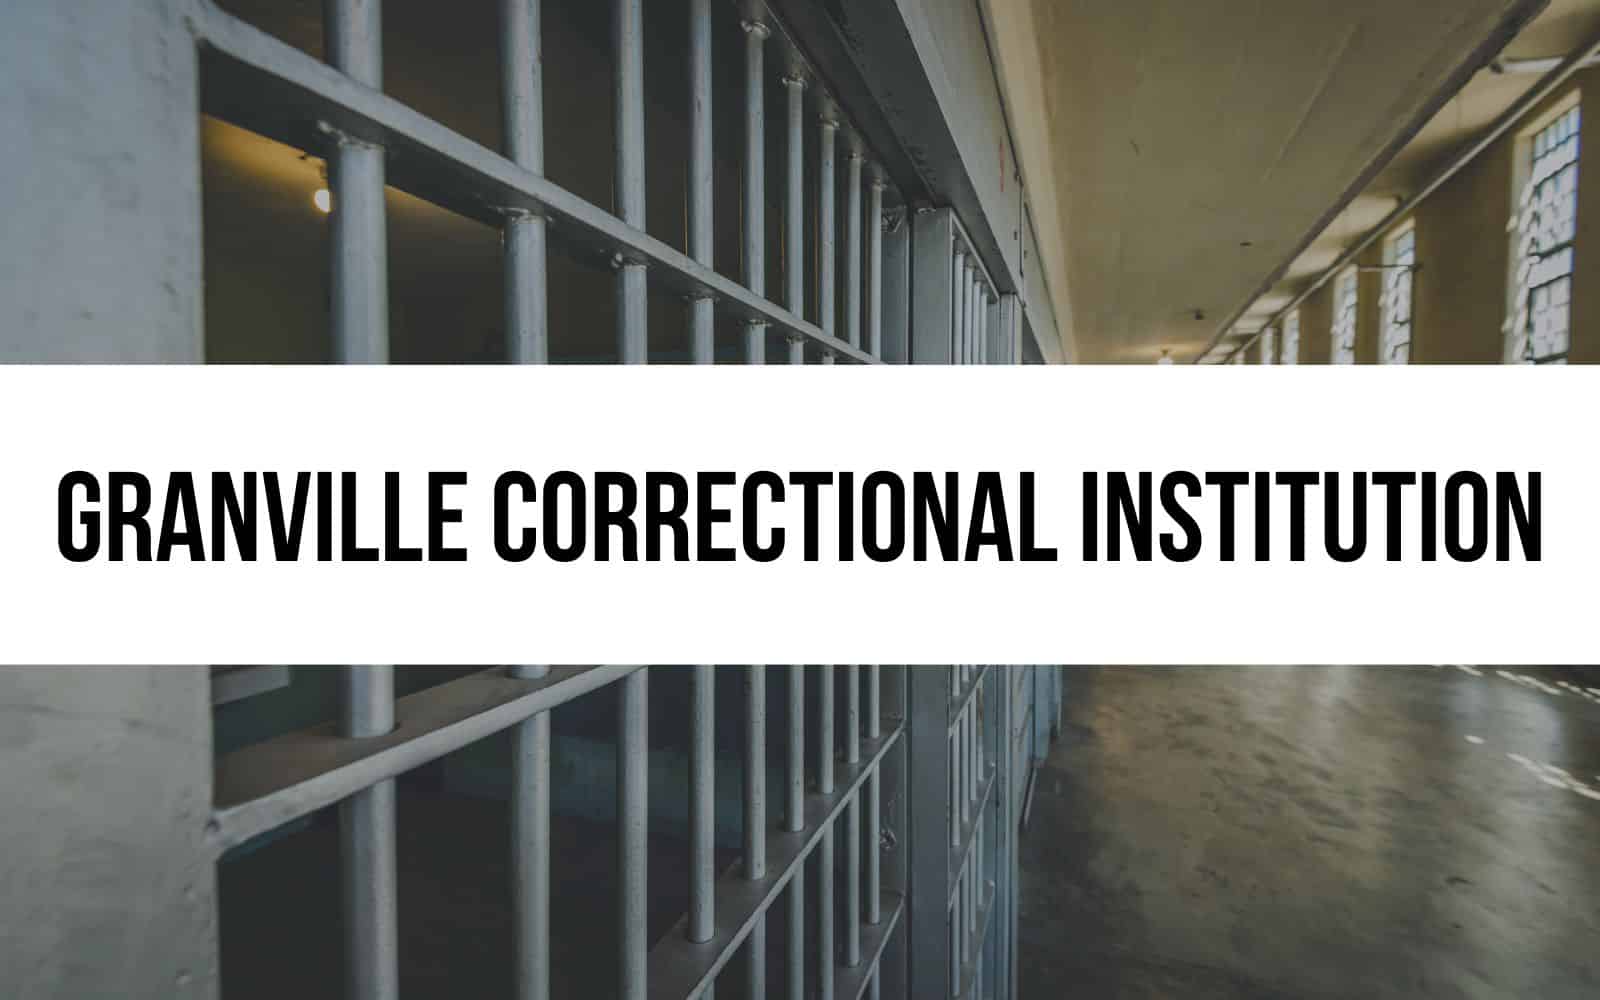 Granville Correctional Institution